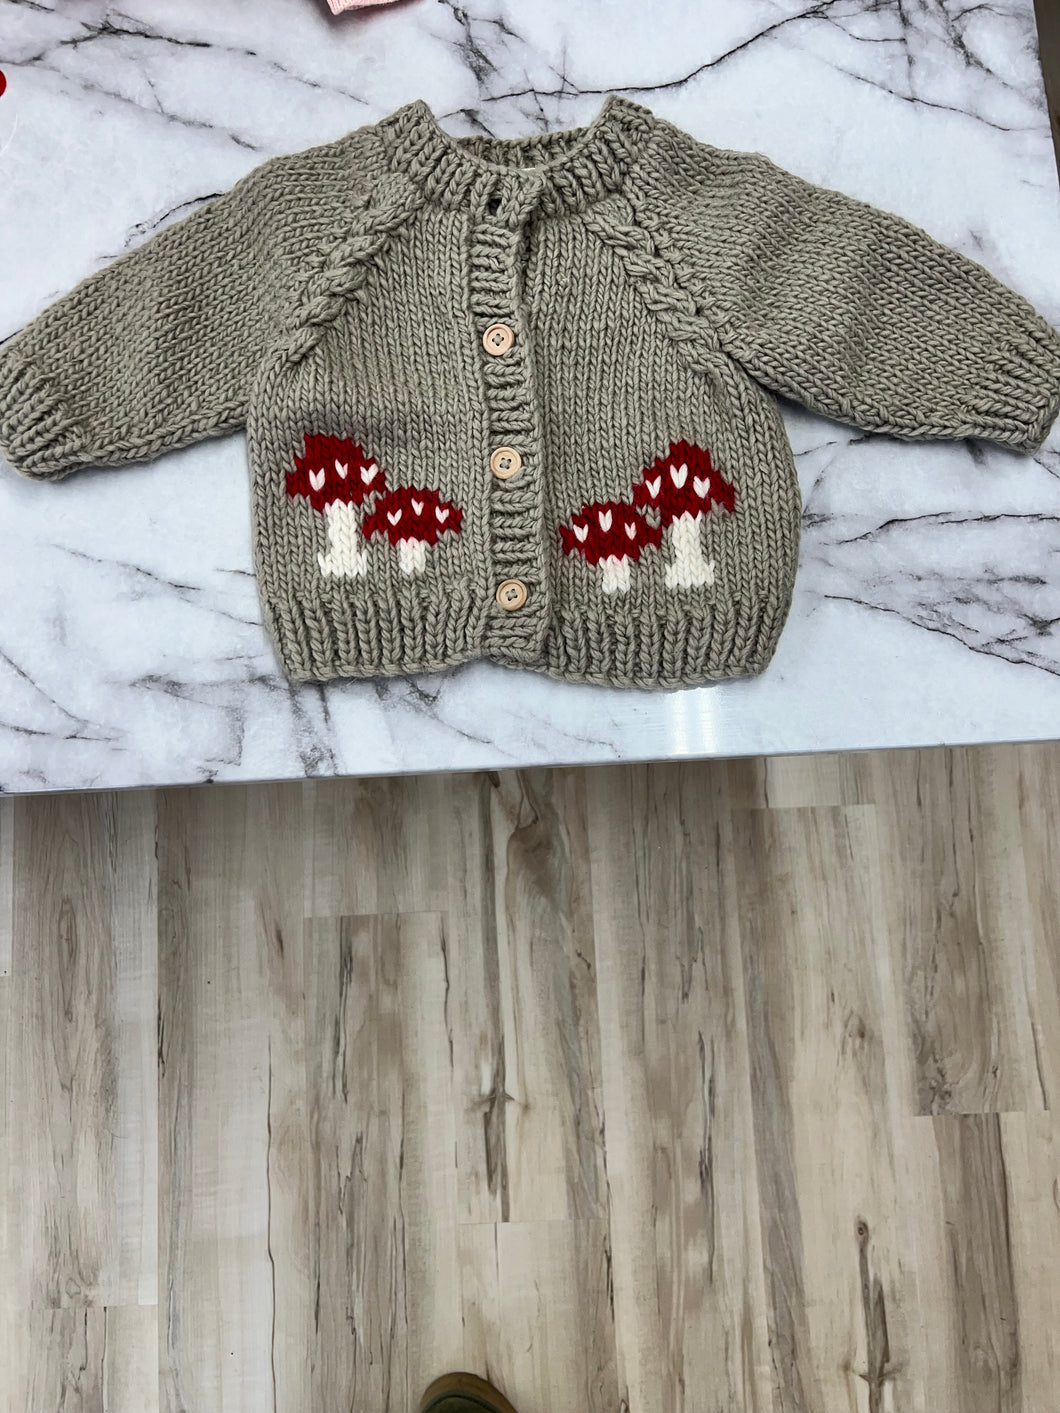 Mushroom crocheted sweater